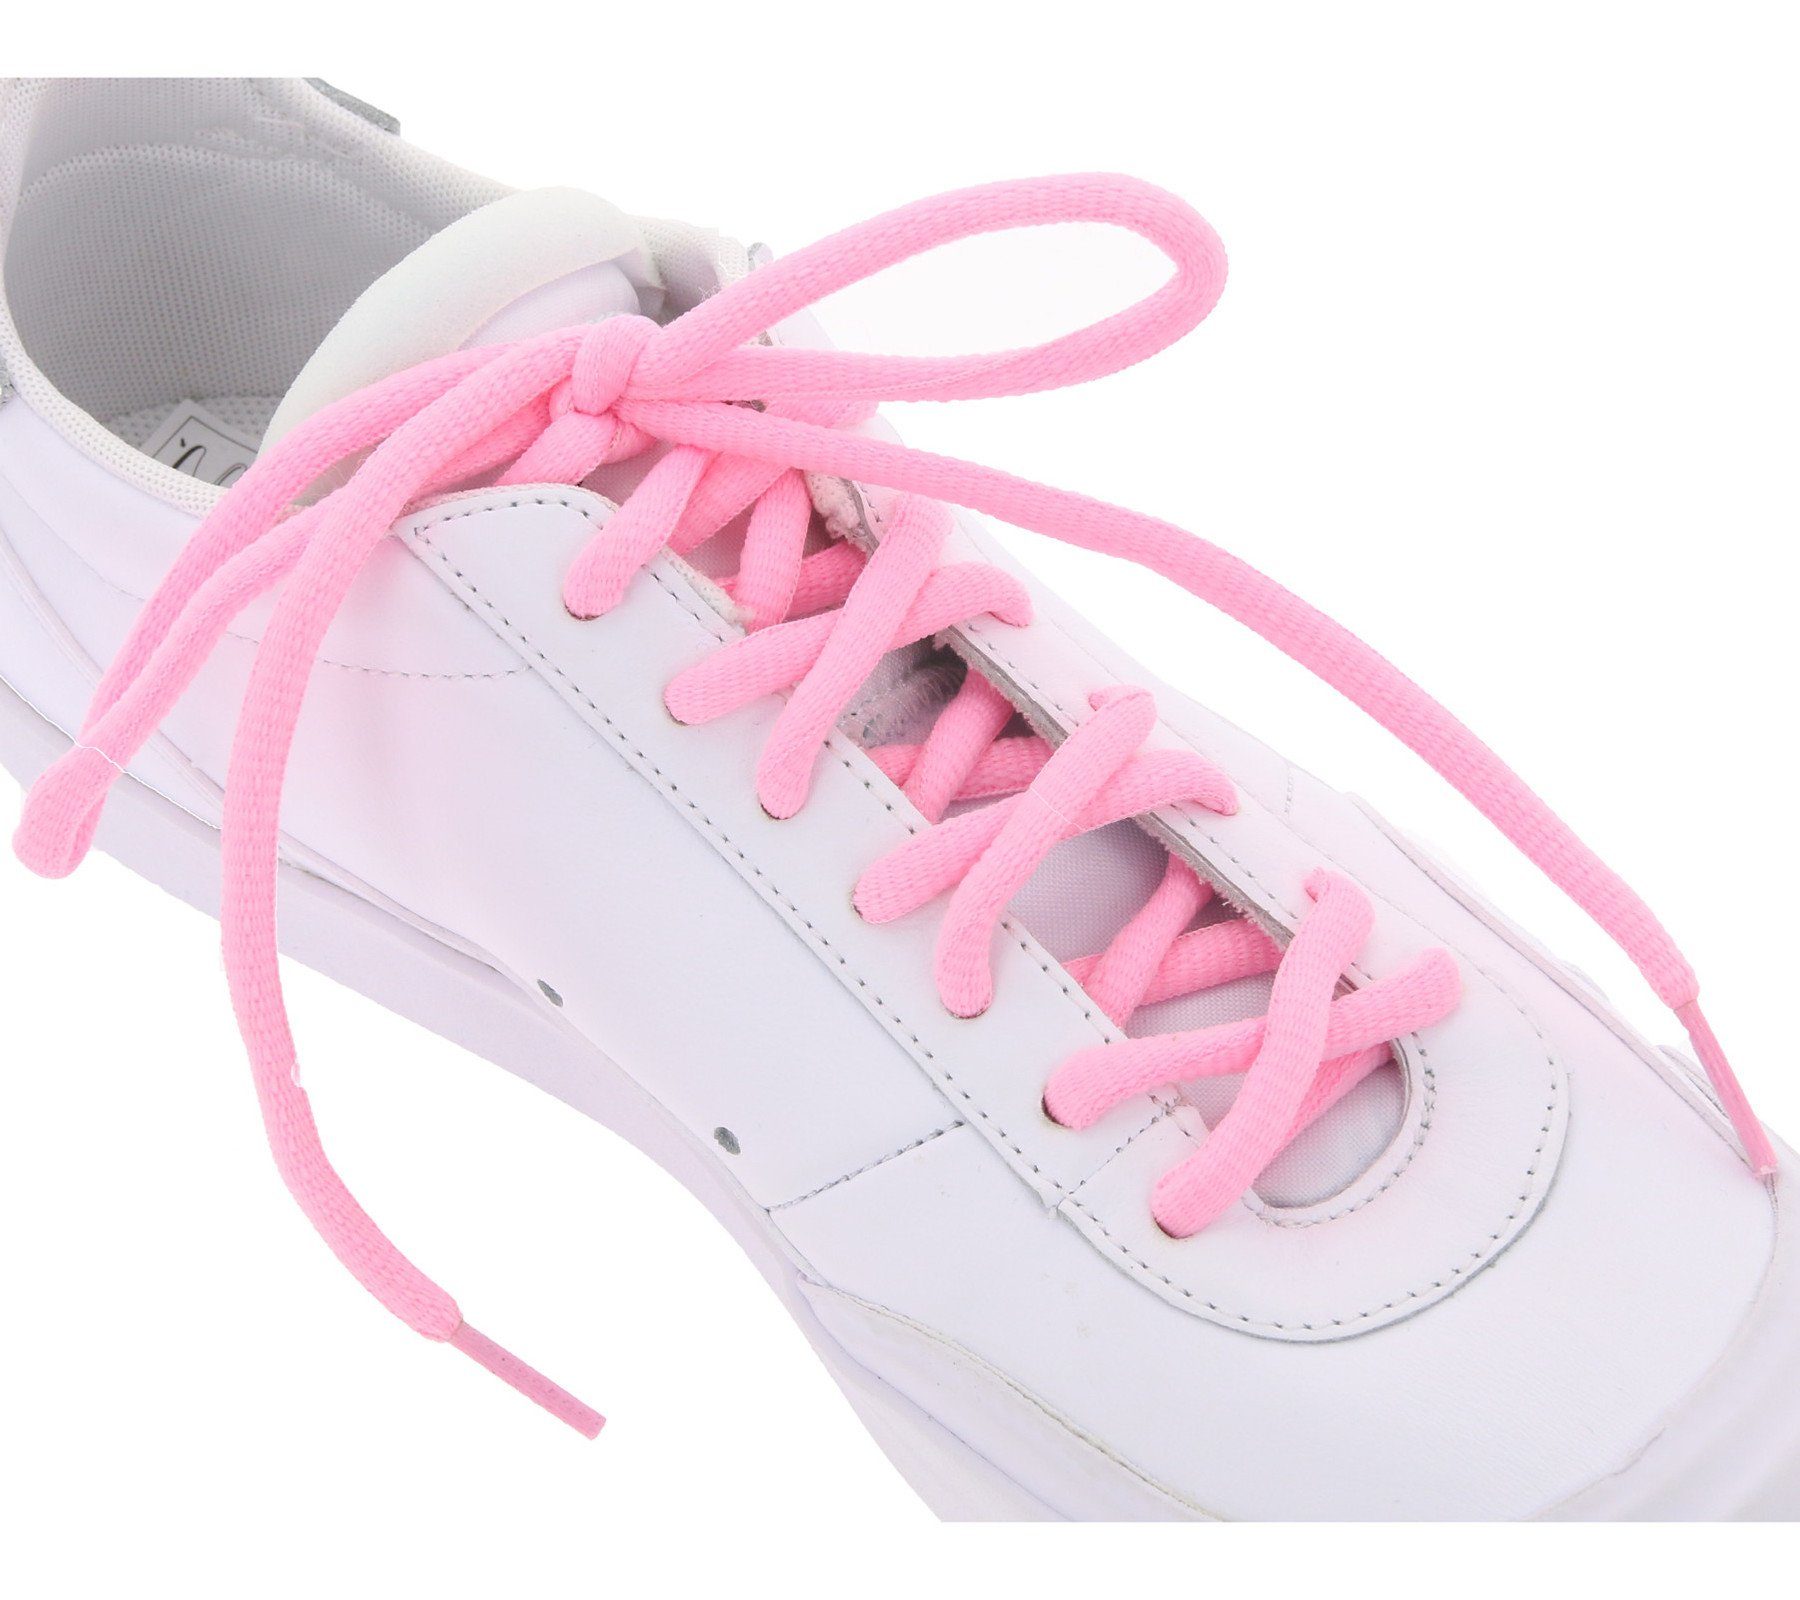 Schnürbänder neonfarbene Tubelaces Schuh TubeLaces Schnürsenkel Pink Schuhbänder Schnürsenkel